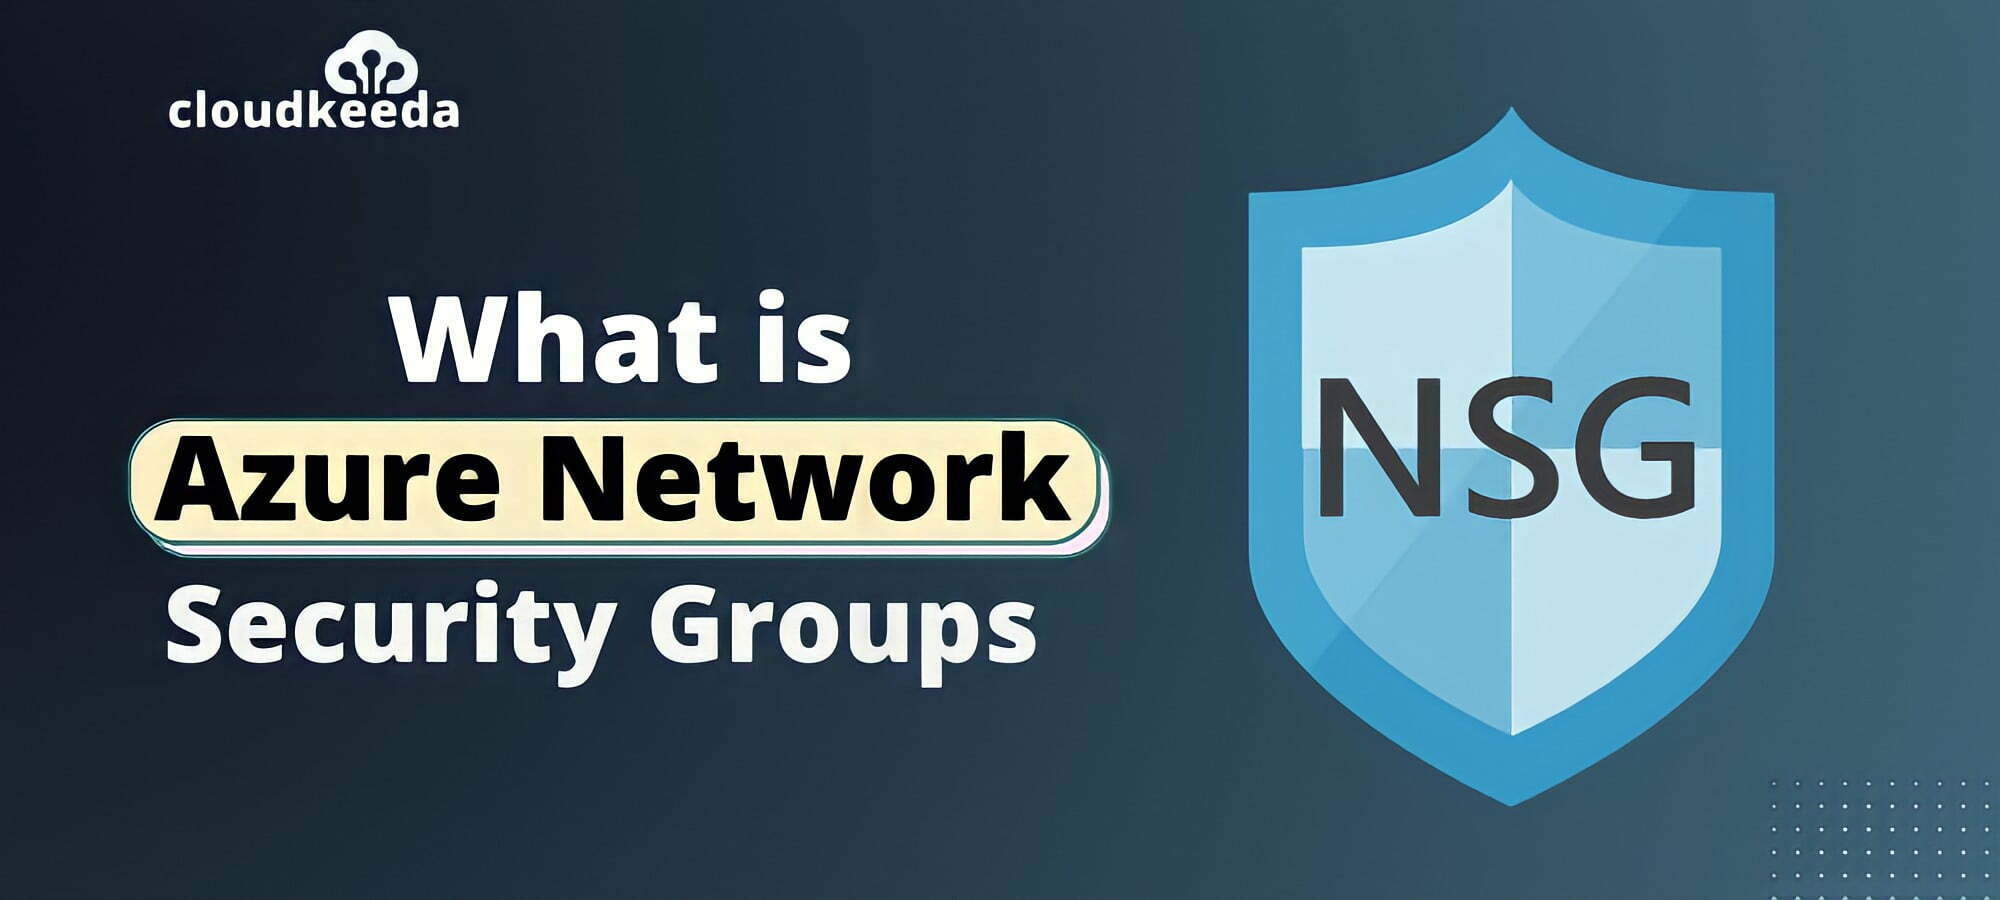 Azure NSG (Azure Network Security Groups)